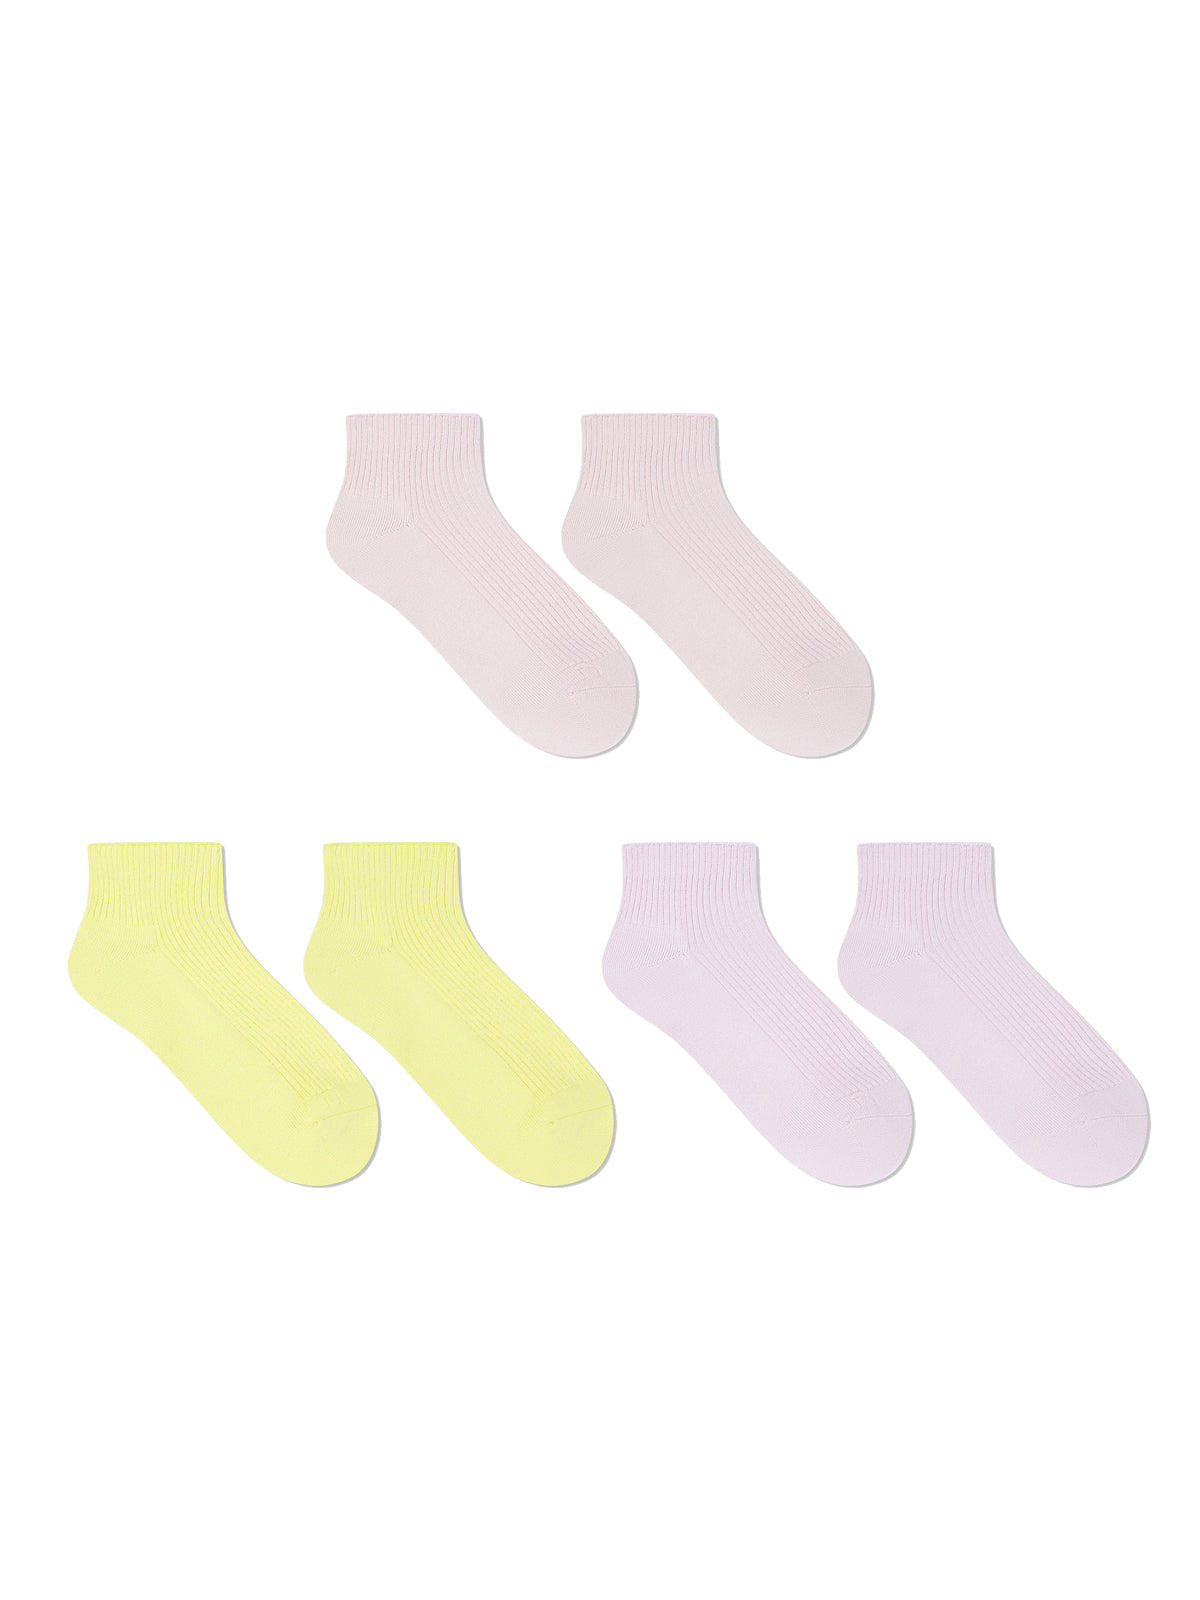 Ribbed High Elastic Ankle Socks Kit of 3 (Dessert Time Limited Edition)